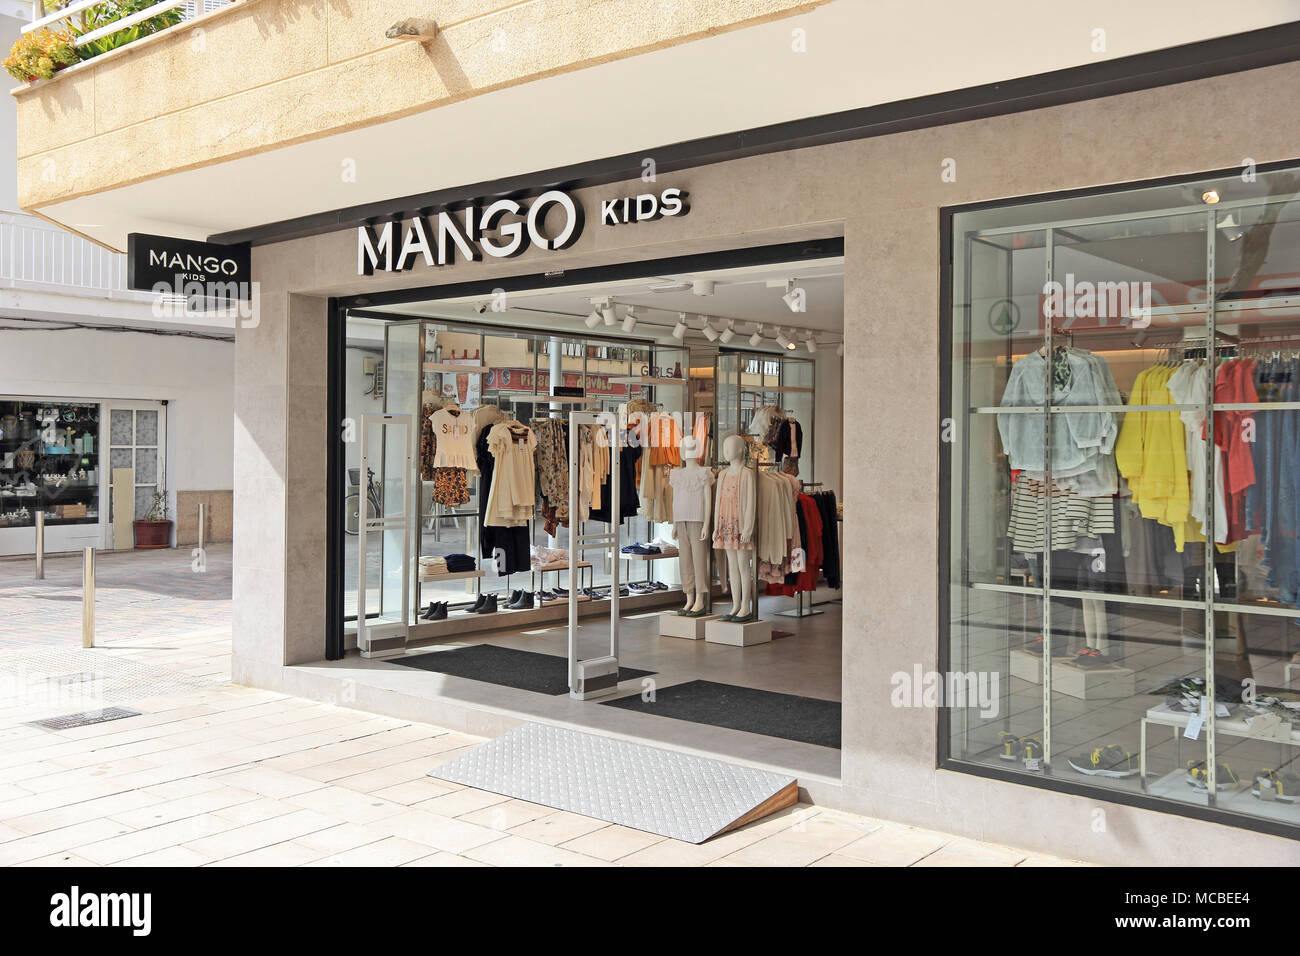 Mango kids clothing store, Cala Millor, Mallorca Stock Photo - Alamy